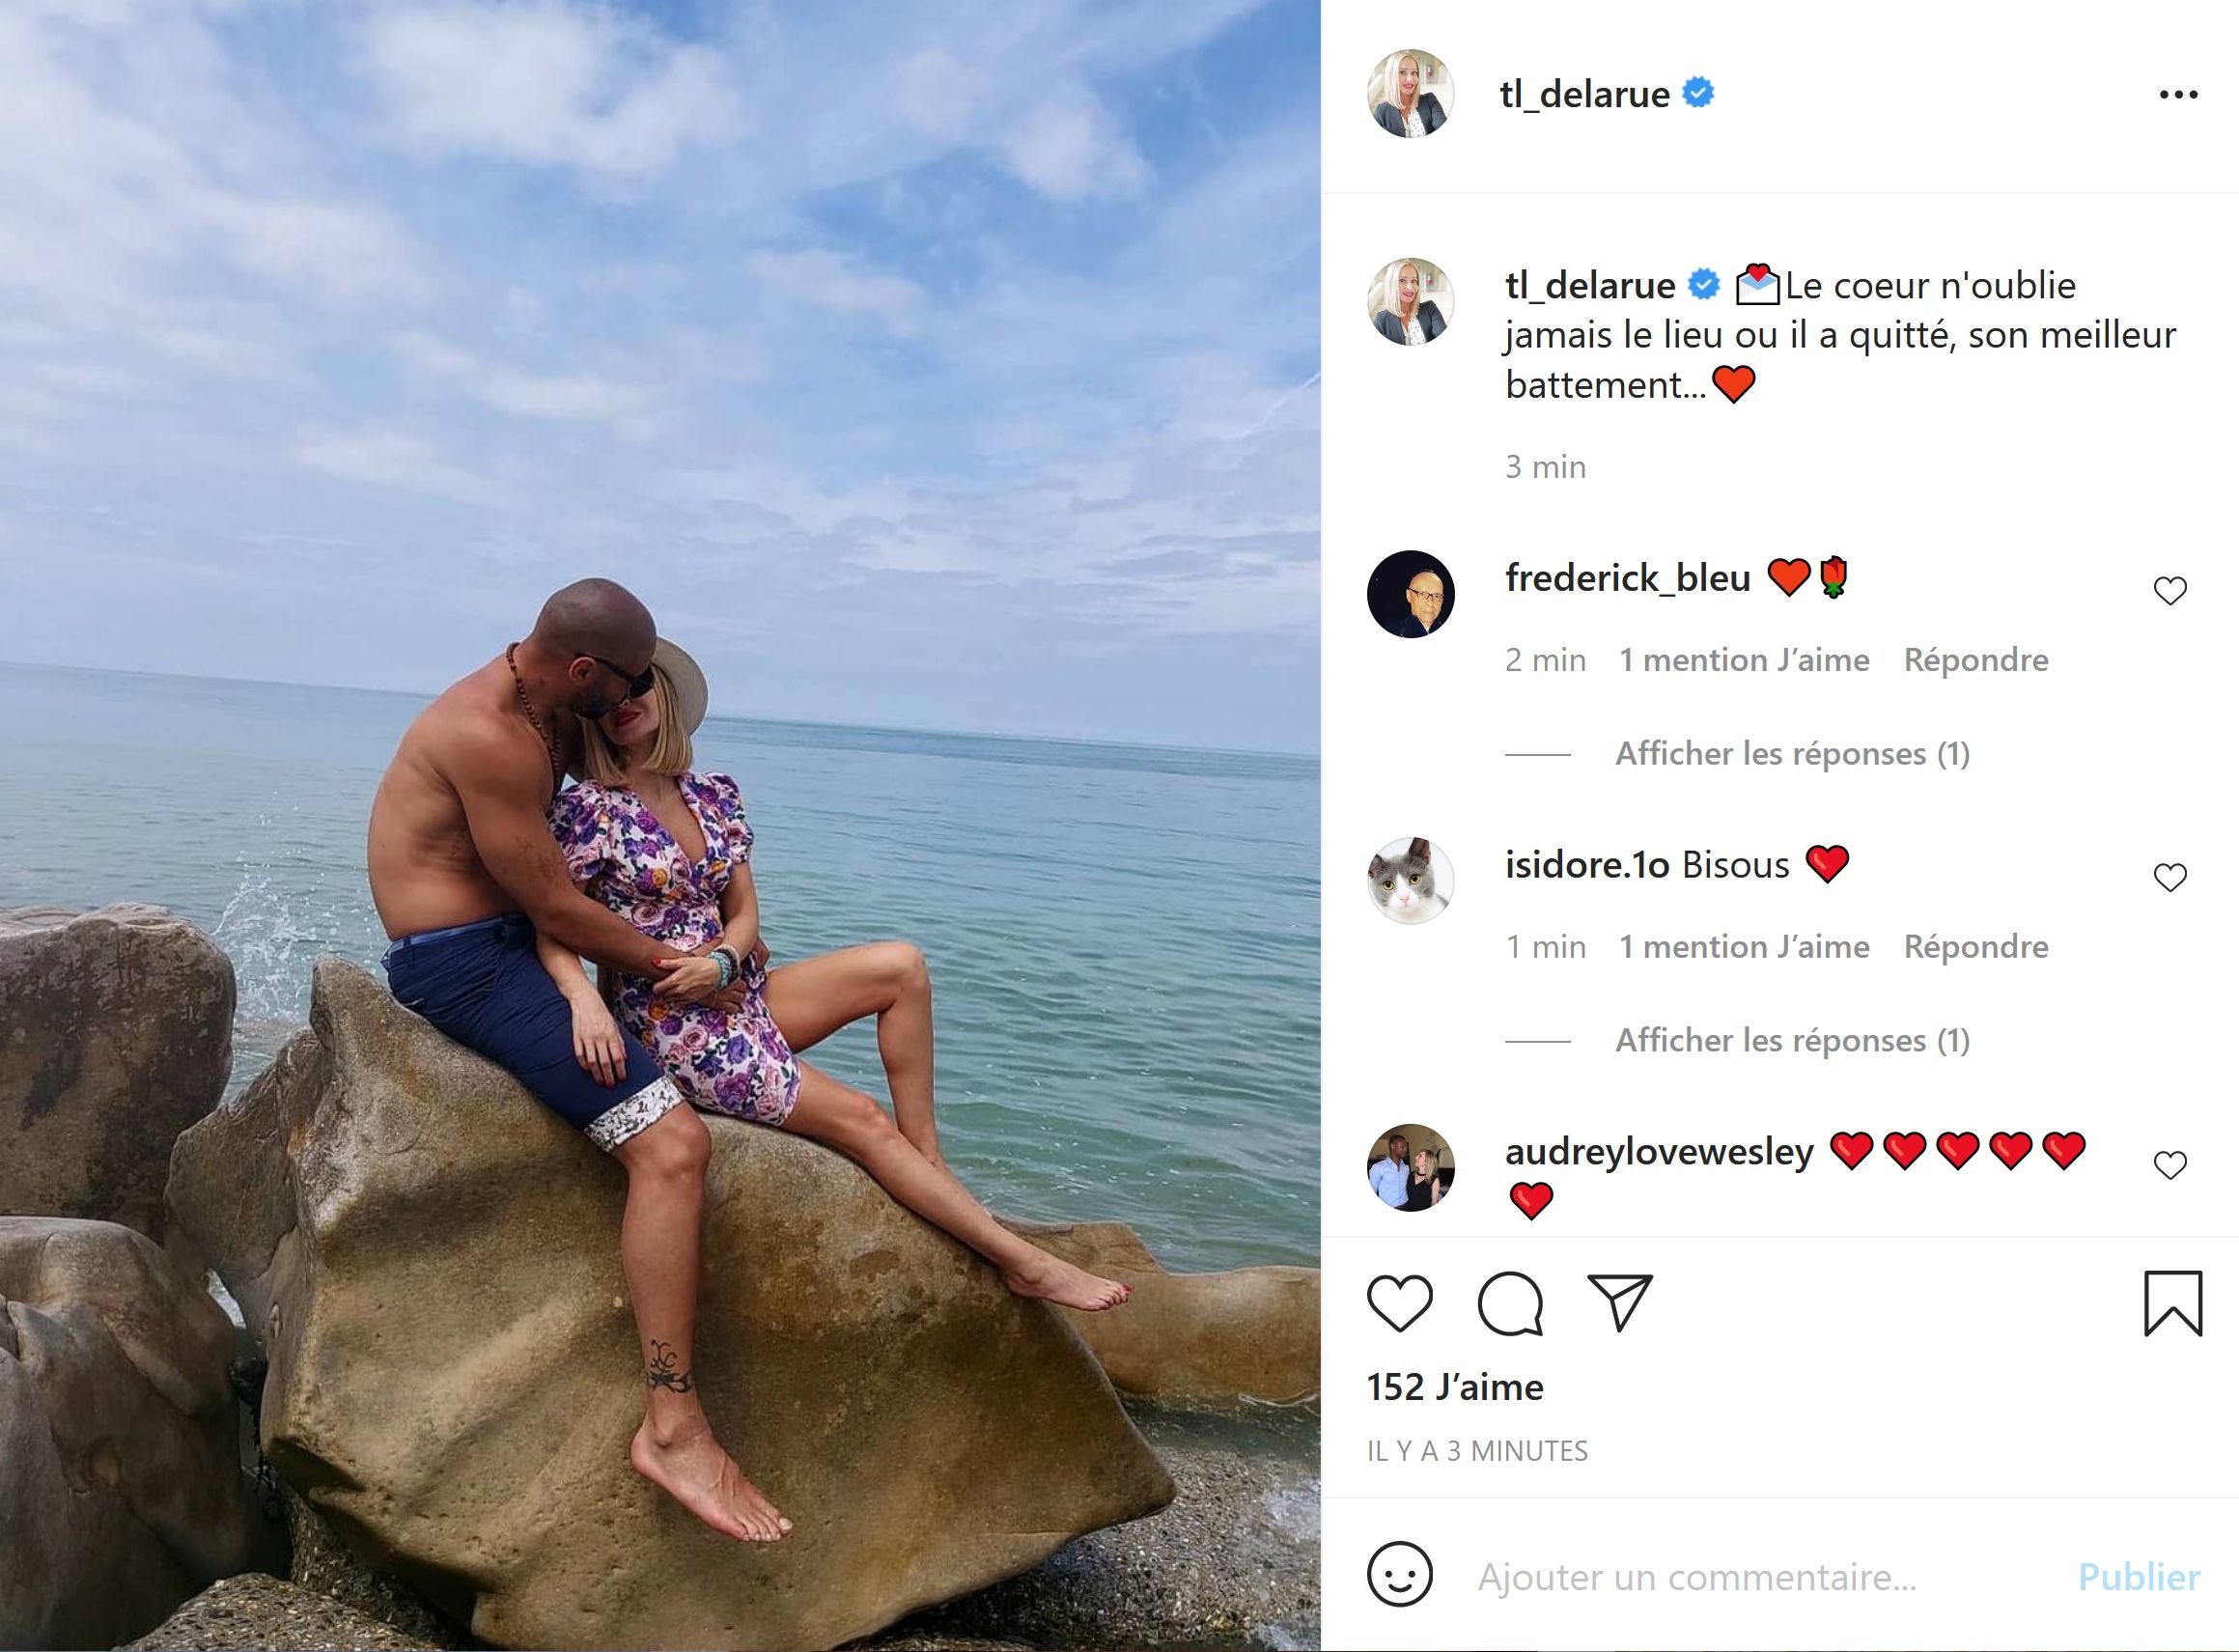  Xavier très proche de Tatiana @Instagram